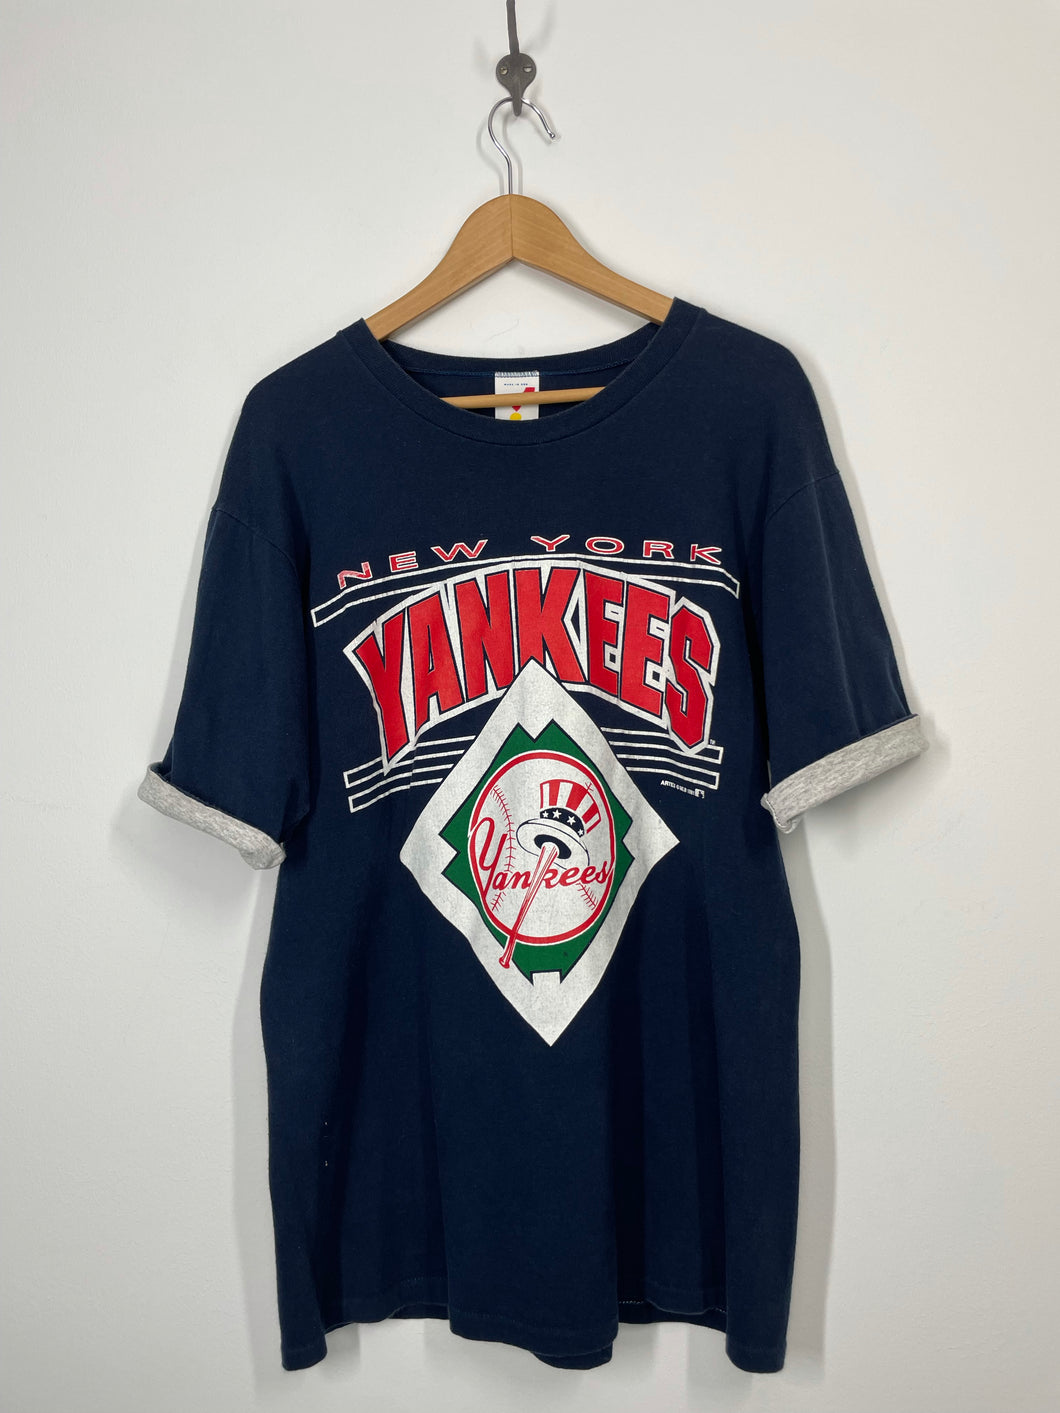 Vintage 90s 1993 MLB Chicago White Sox Baseball T-shirt Fits 